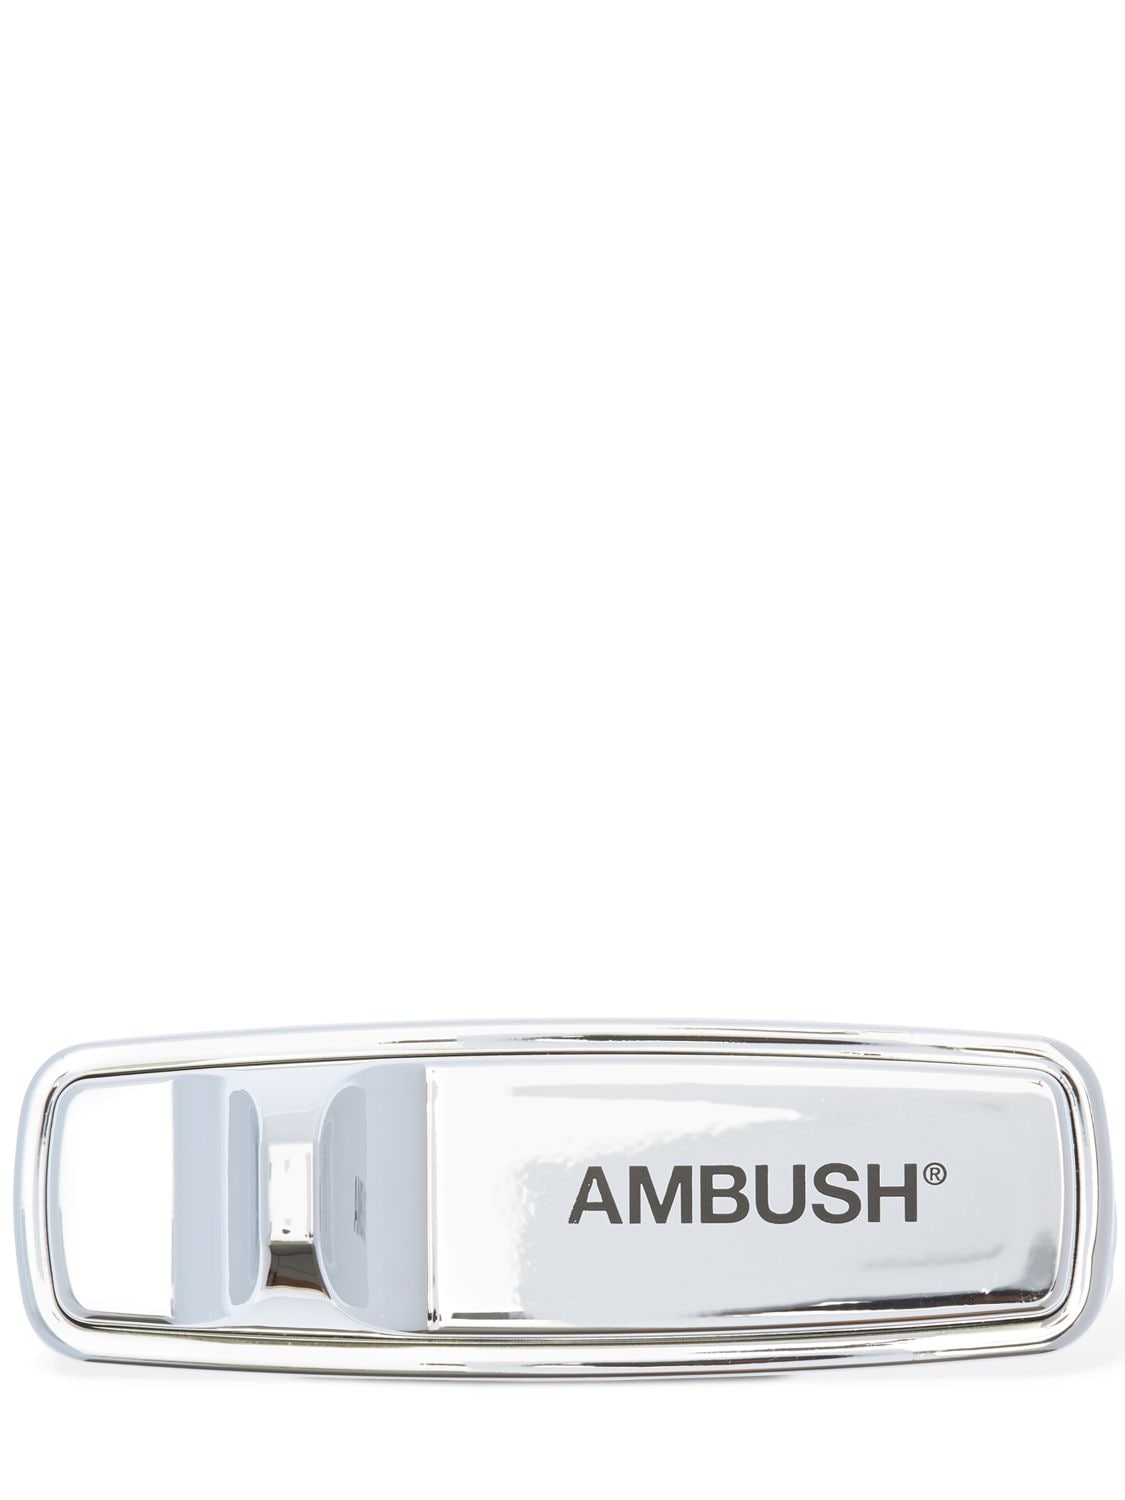 AMBUSH SECURITY TAG PIN,70IP3B007-U0LMVKVS0